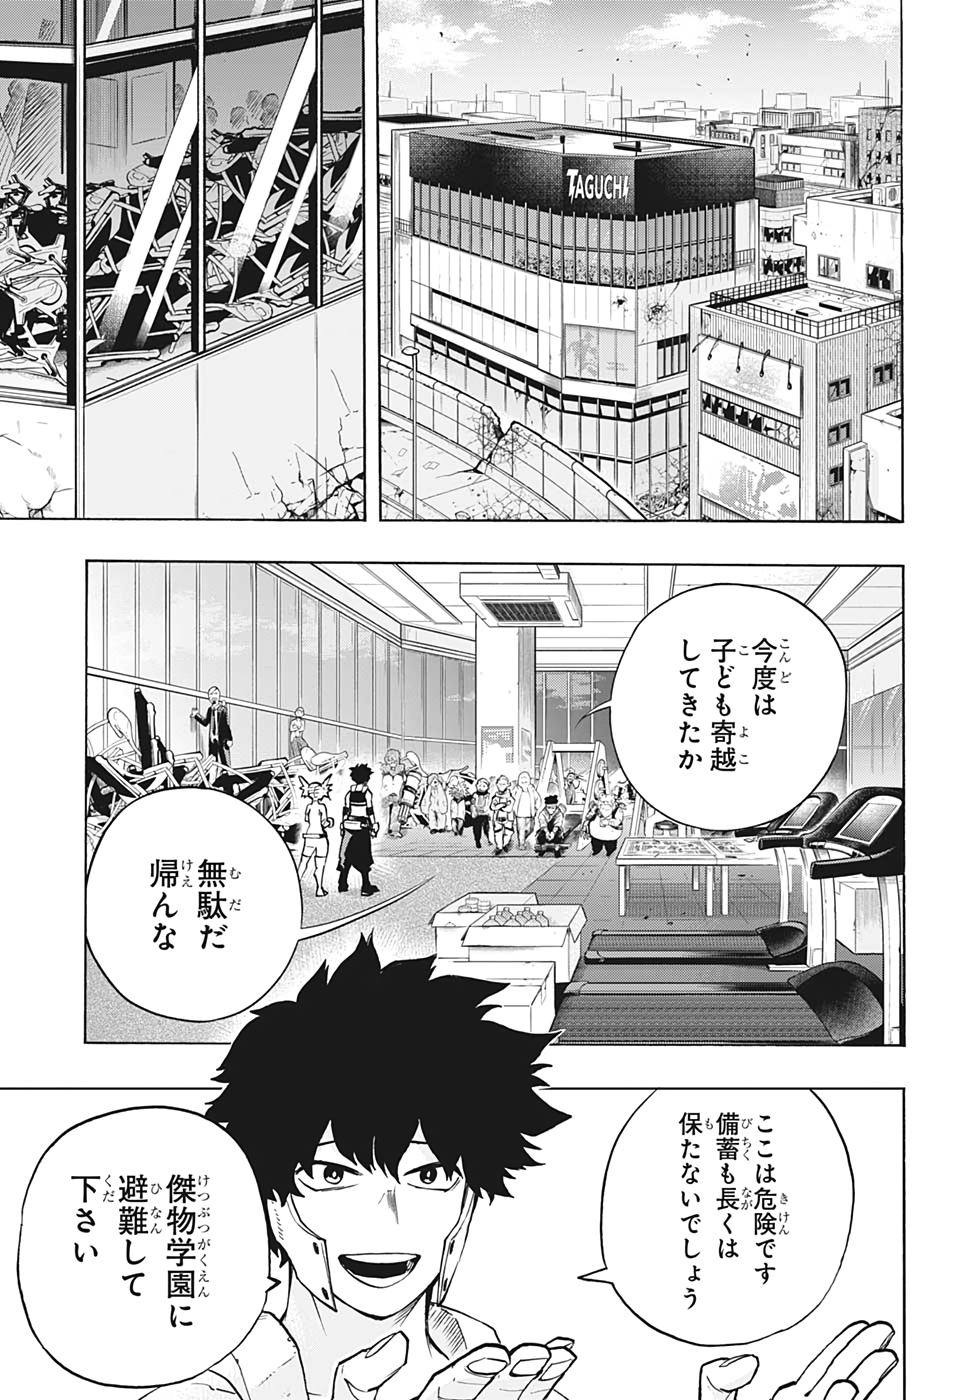 Boku no Hero Academia - Chapter 307 - Page 3